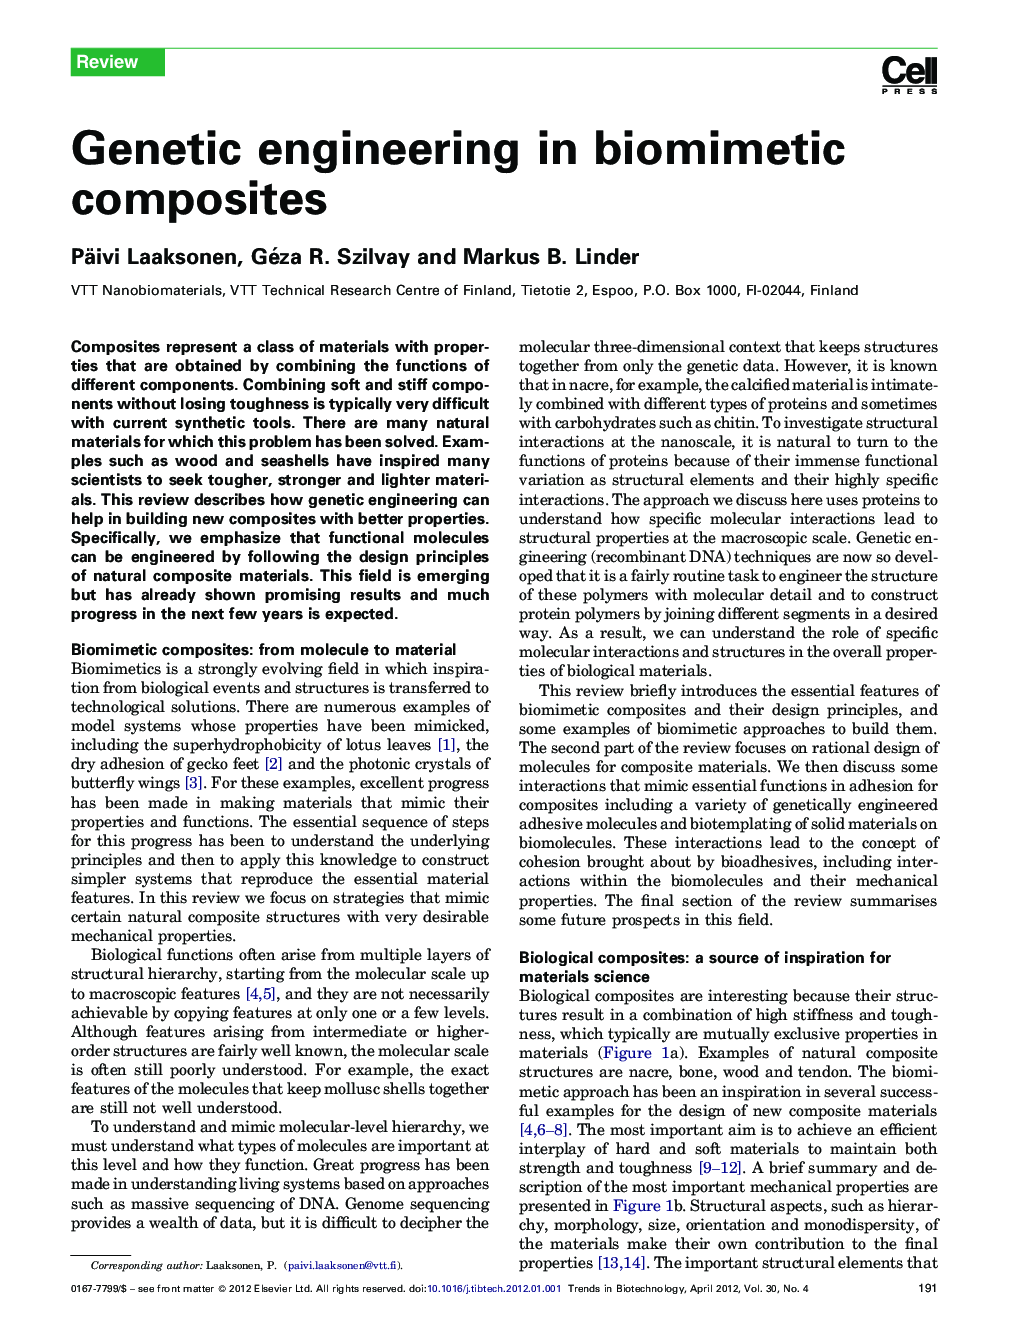 Genetic engineering in biomimetic composites